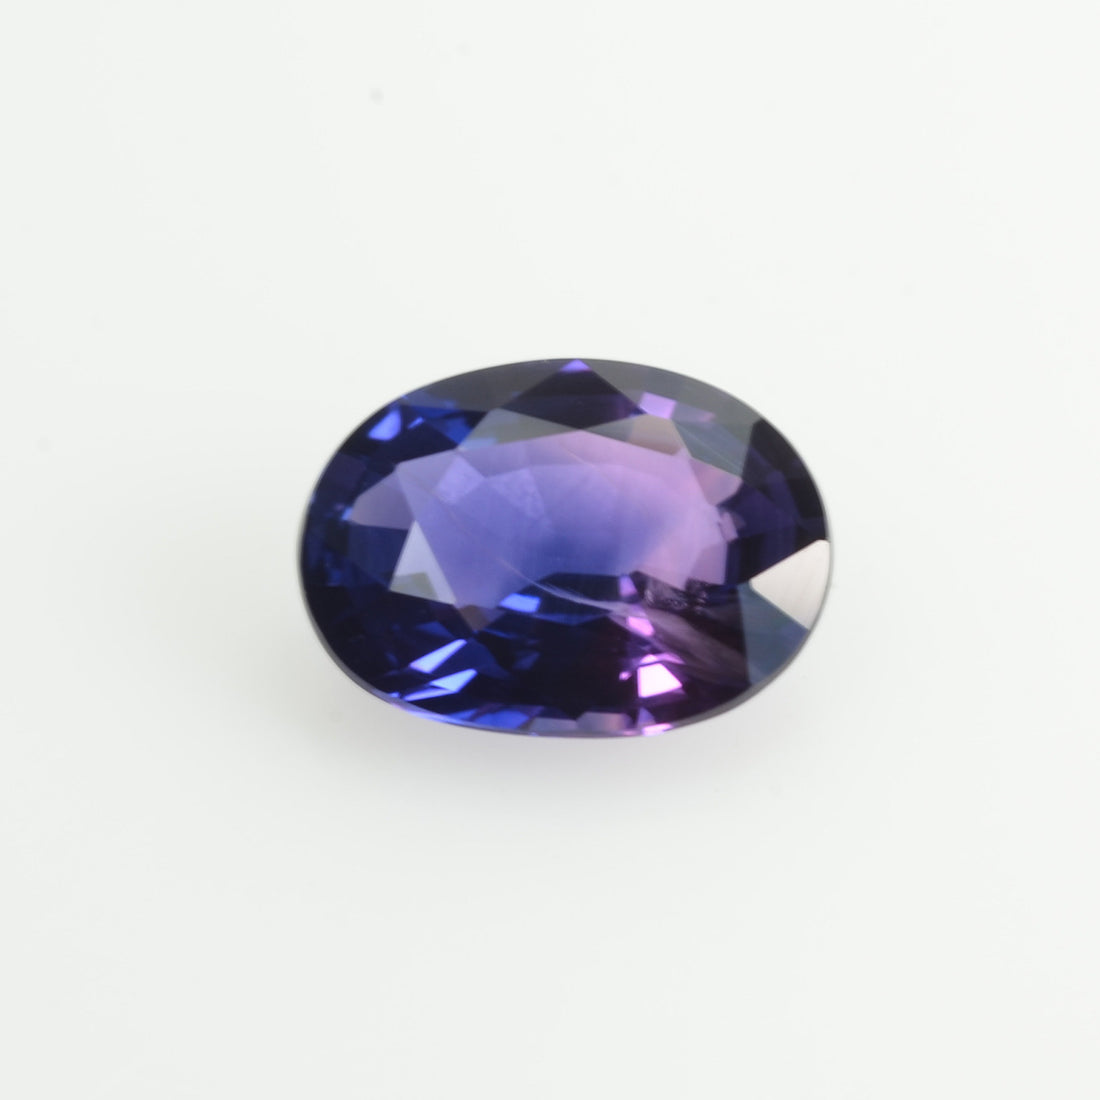 1.12 cts Natural Fancy Bi-Color Sapphire Loose Gemstone oval Cut - Thai Gems Export Ltd.